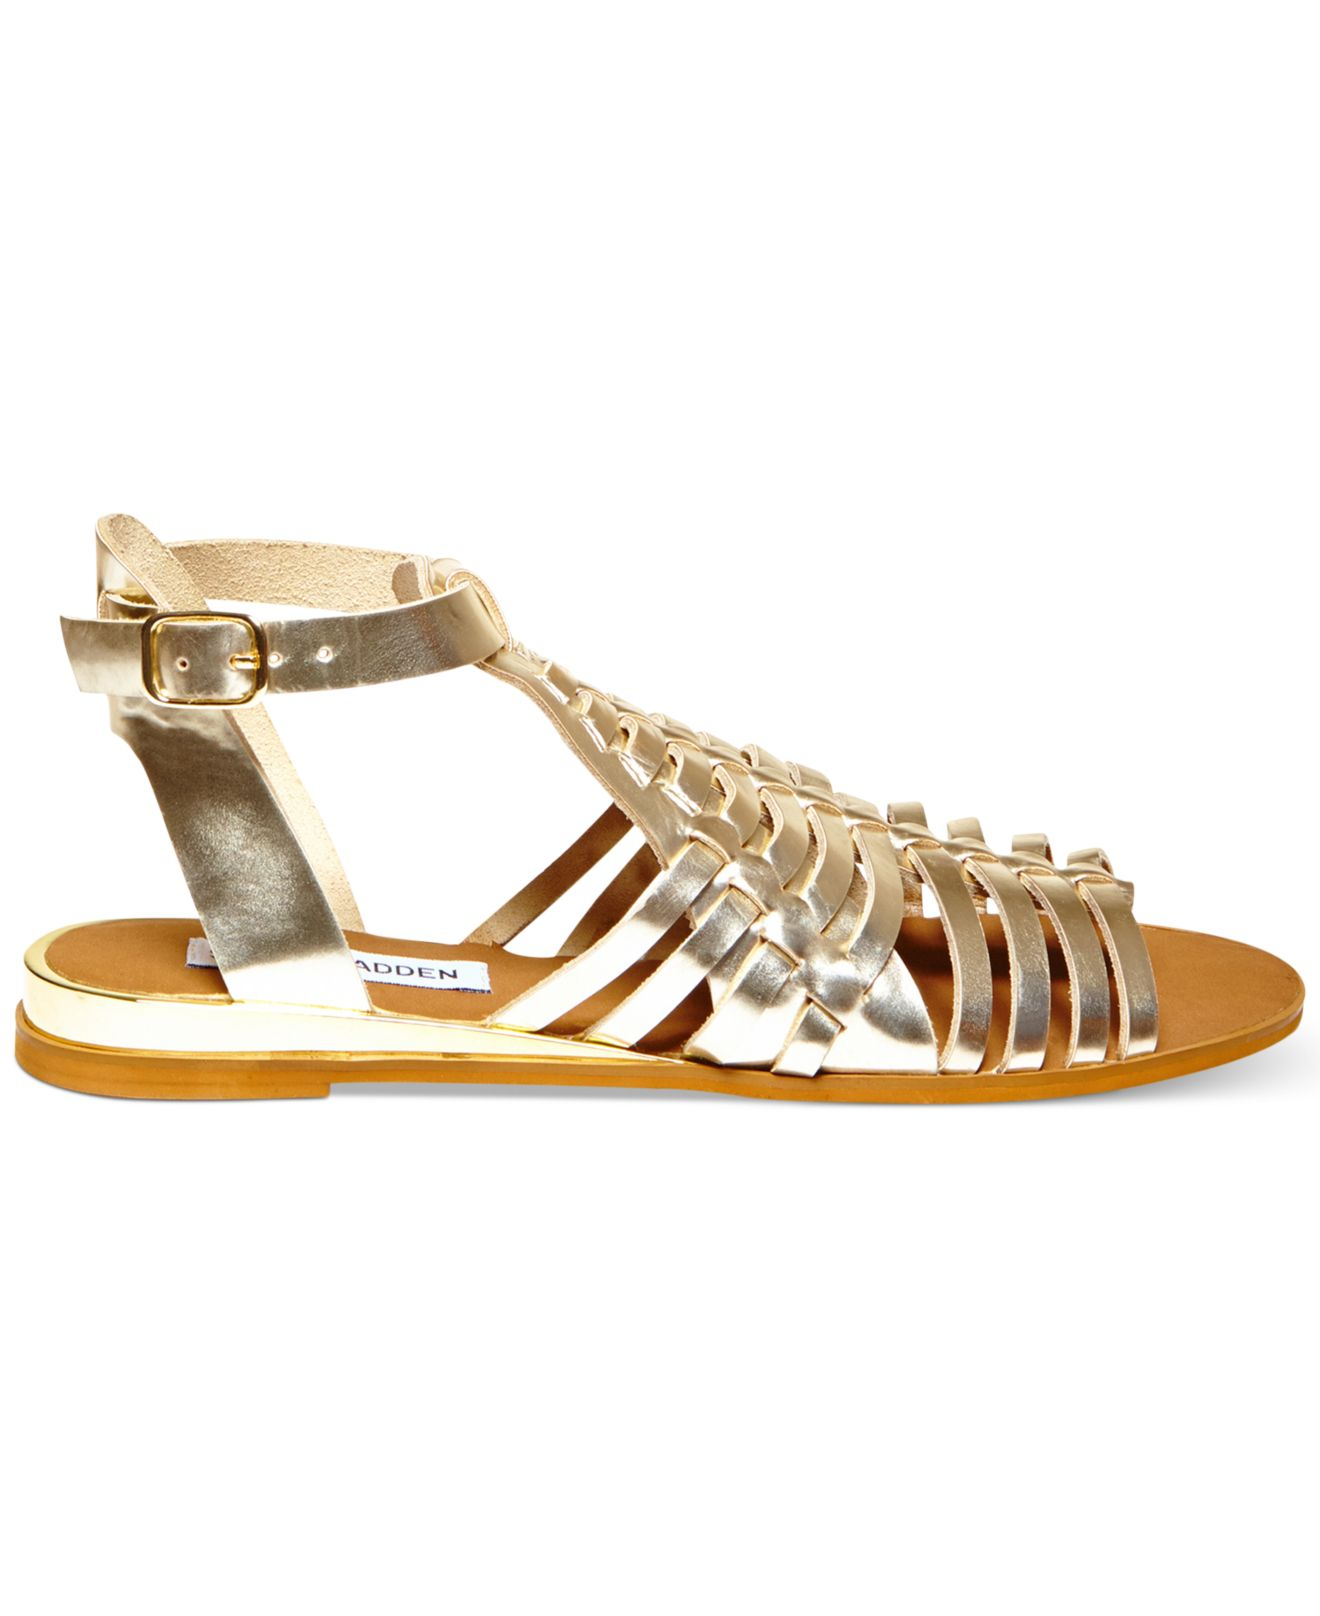 Lyst - Steve madden Women's Comely Flat Gladiator Sandals in Metallic